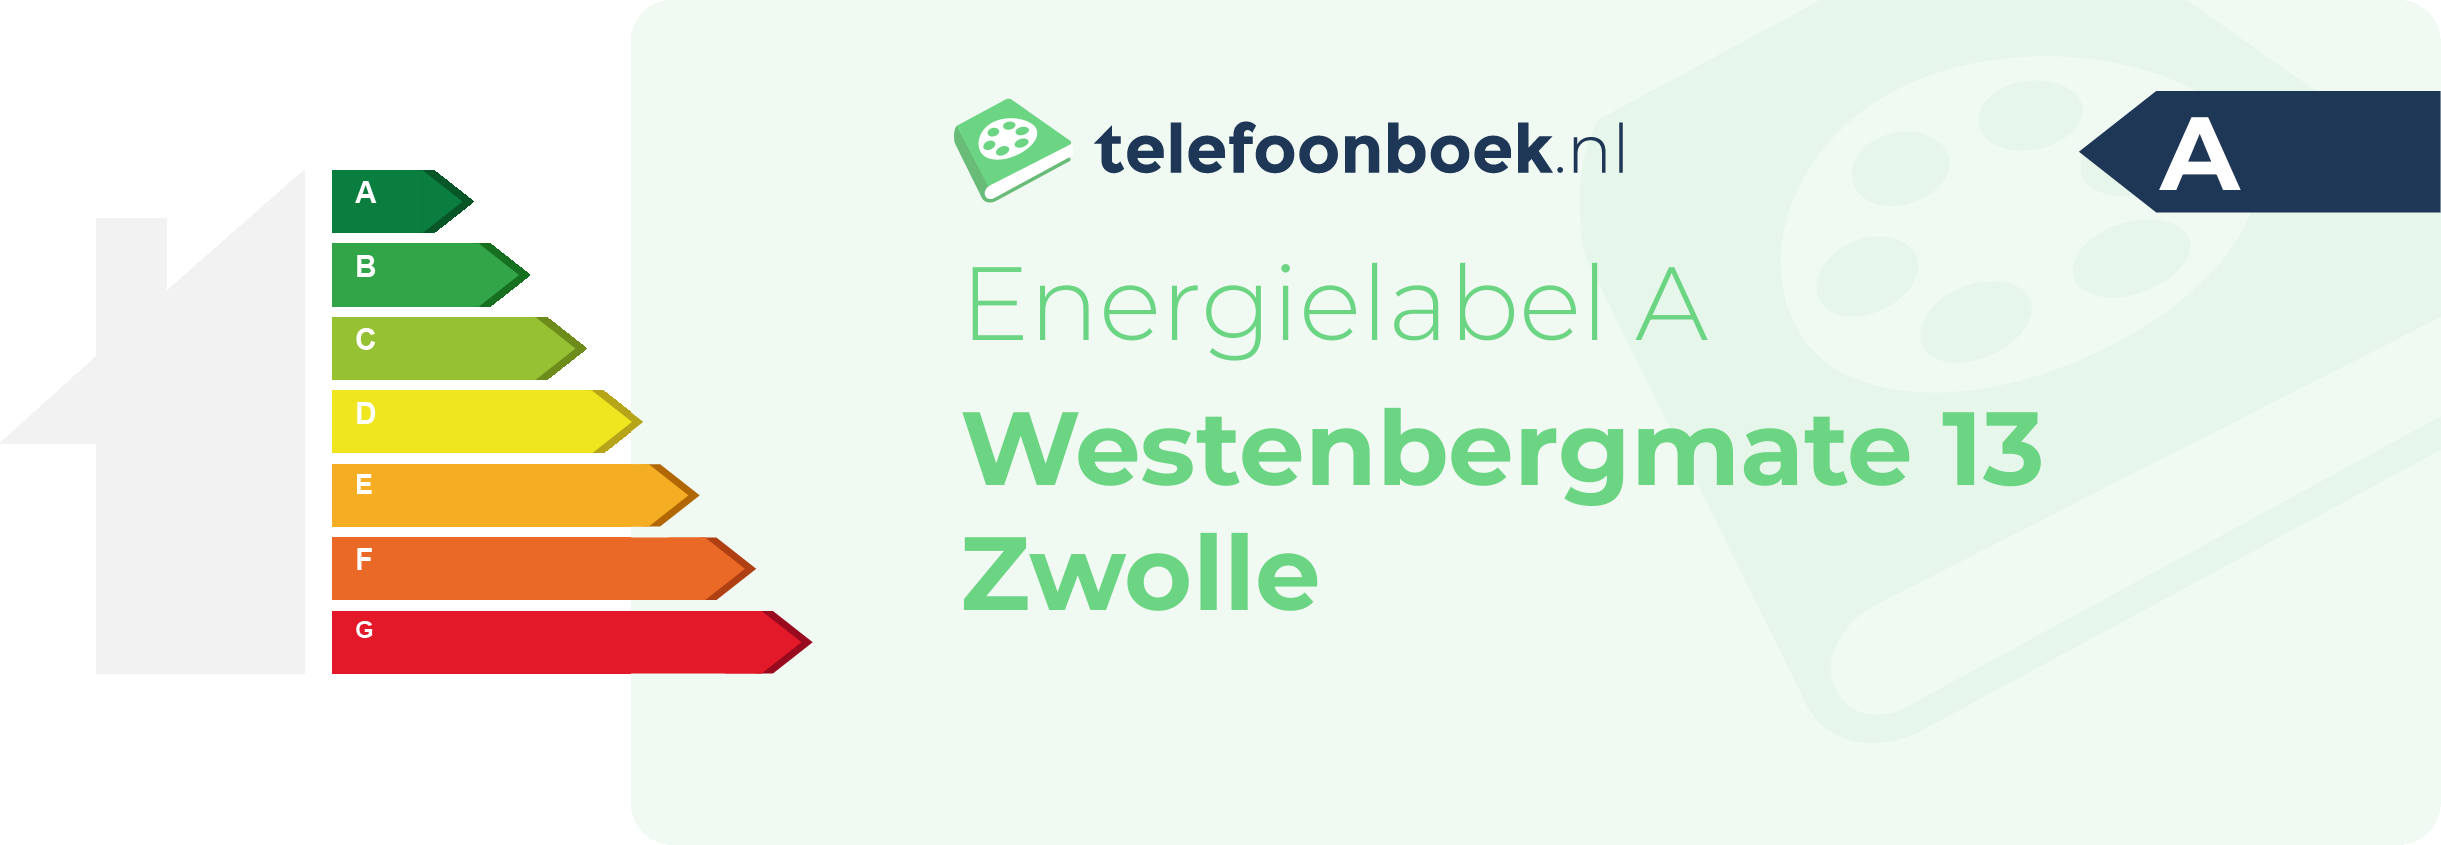 Energielabel Westenbergmate 13 Zwolle